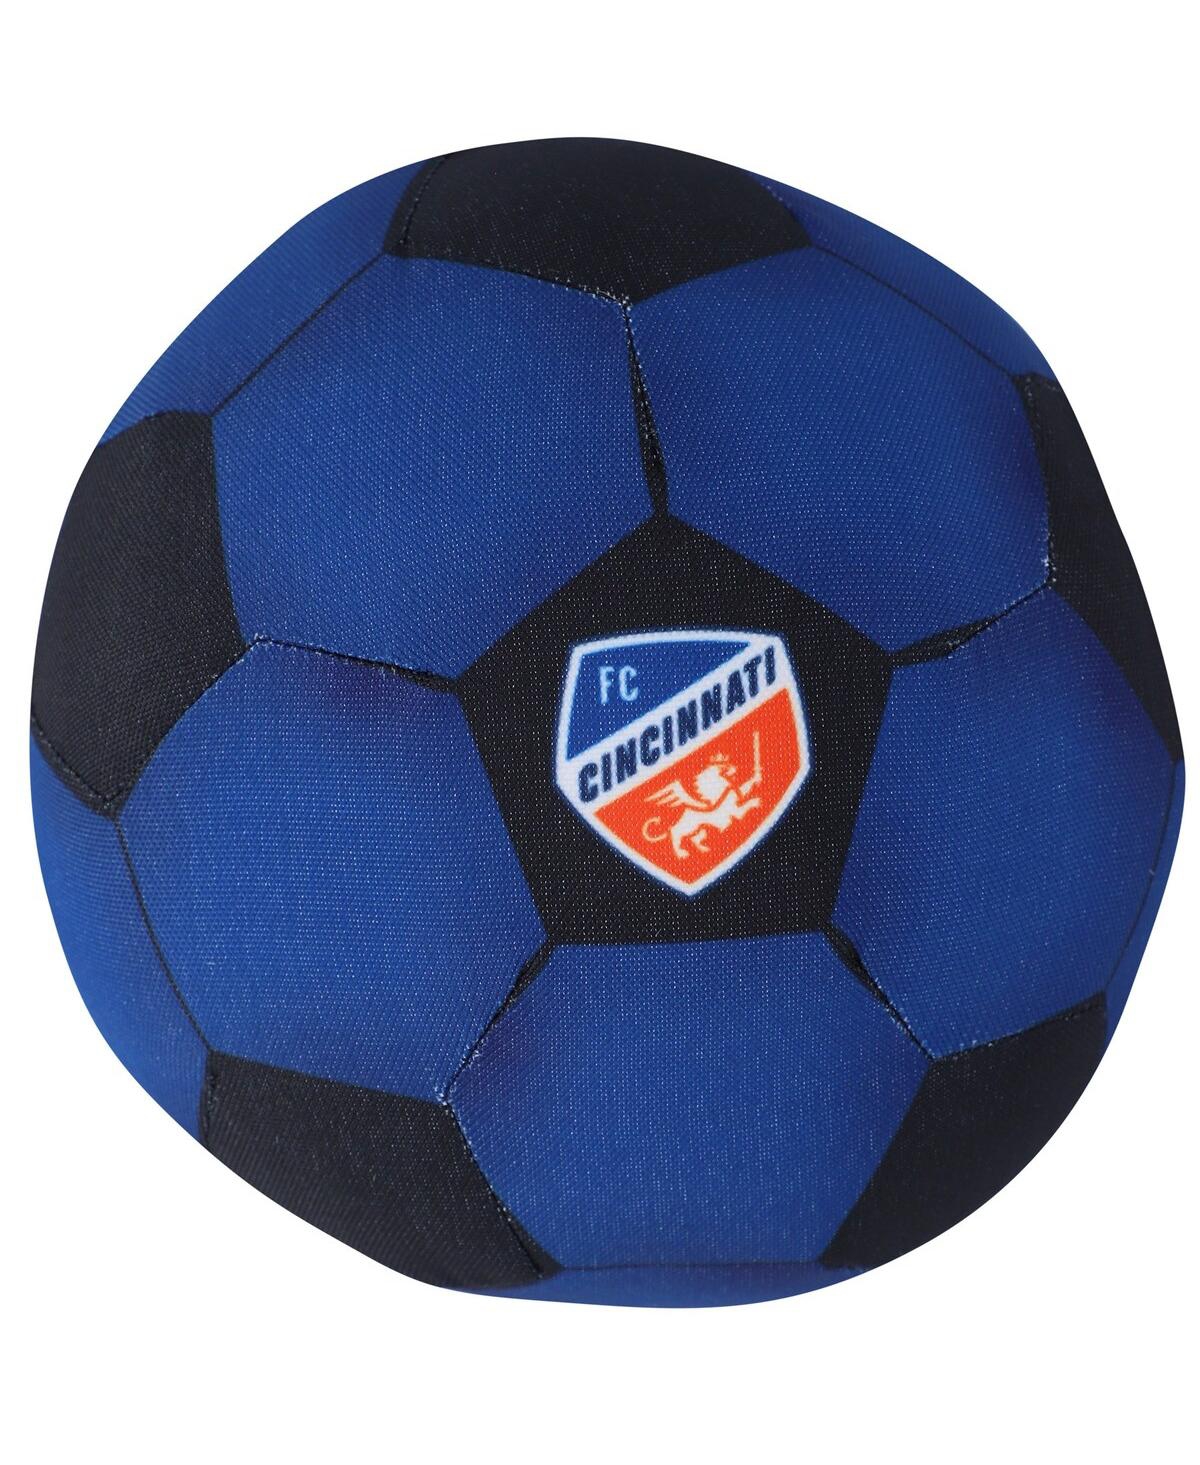 Fc Cincinnati Soccer Ball Plush Dog Toy - Blue